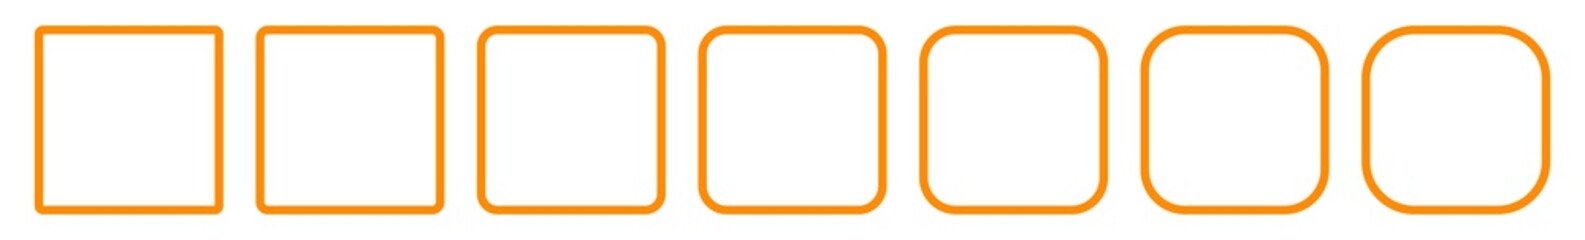 Square Icon Orange | Round Squares | Foursquare Symbol | Frame Logo | Button Sign | Isolated | Variations